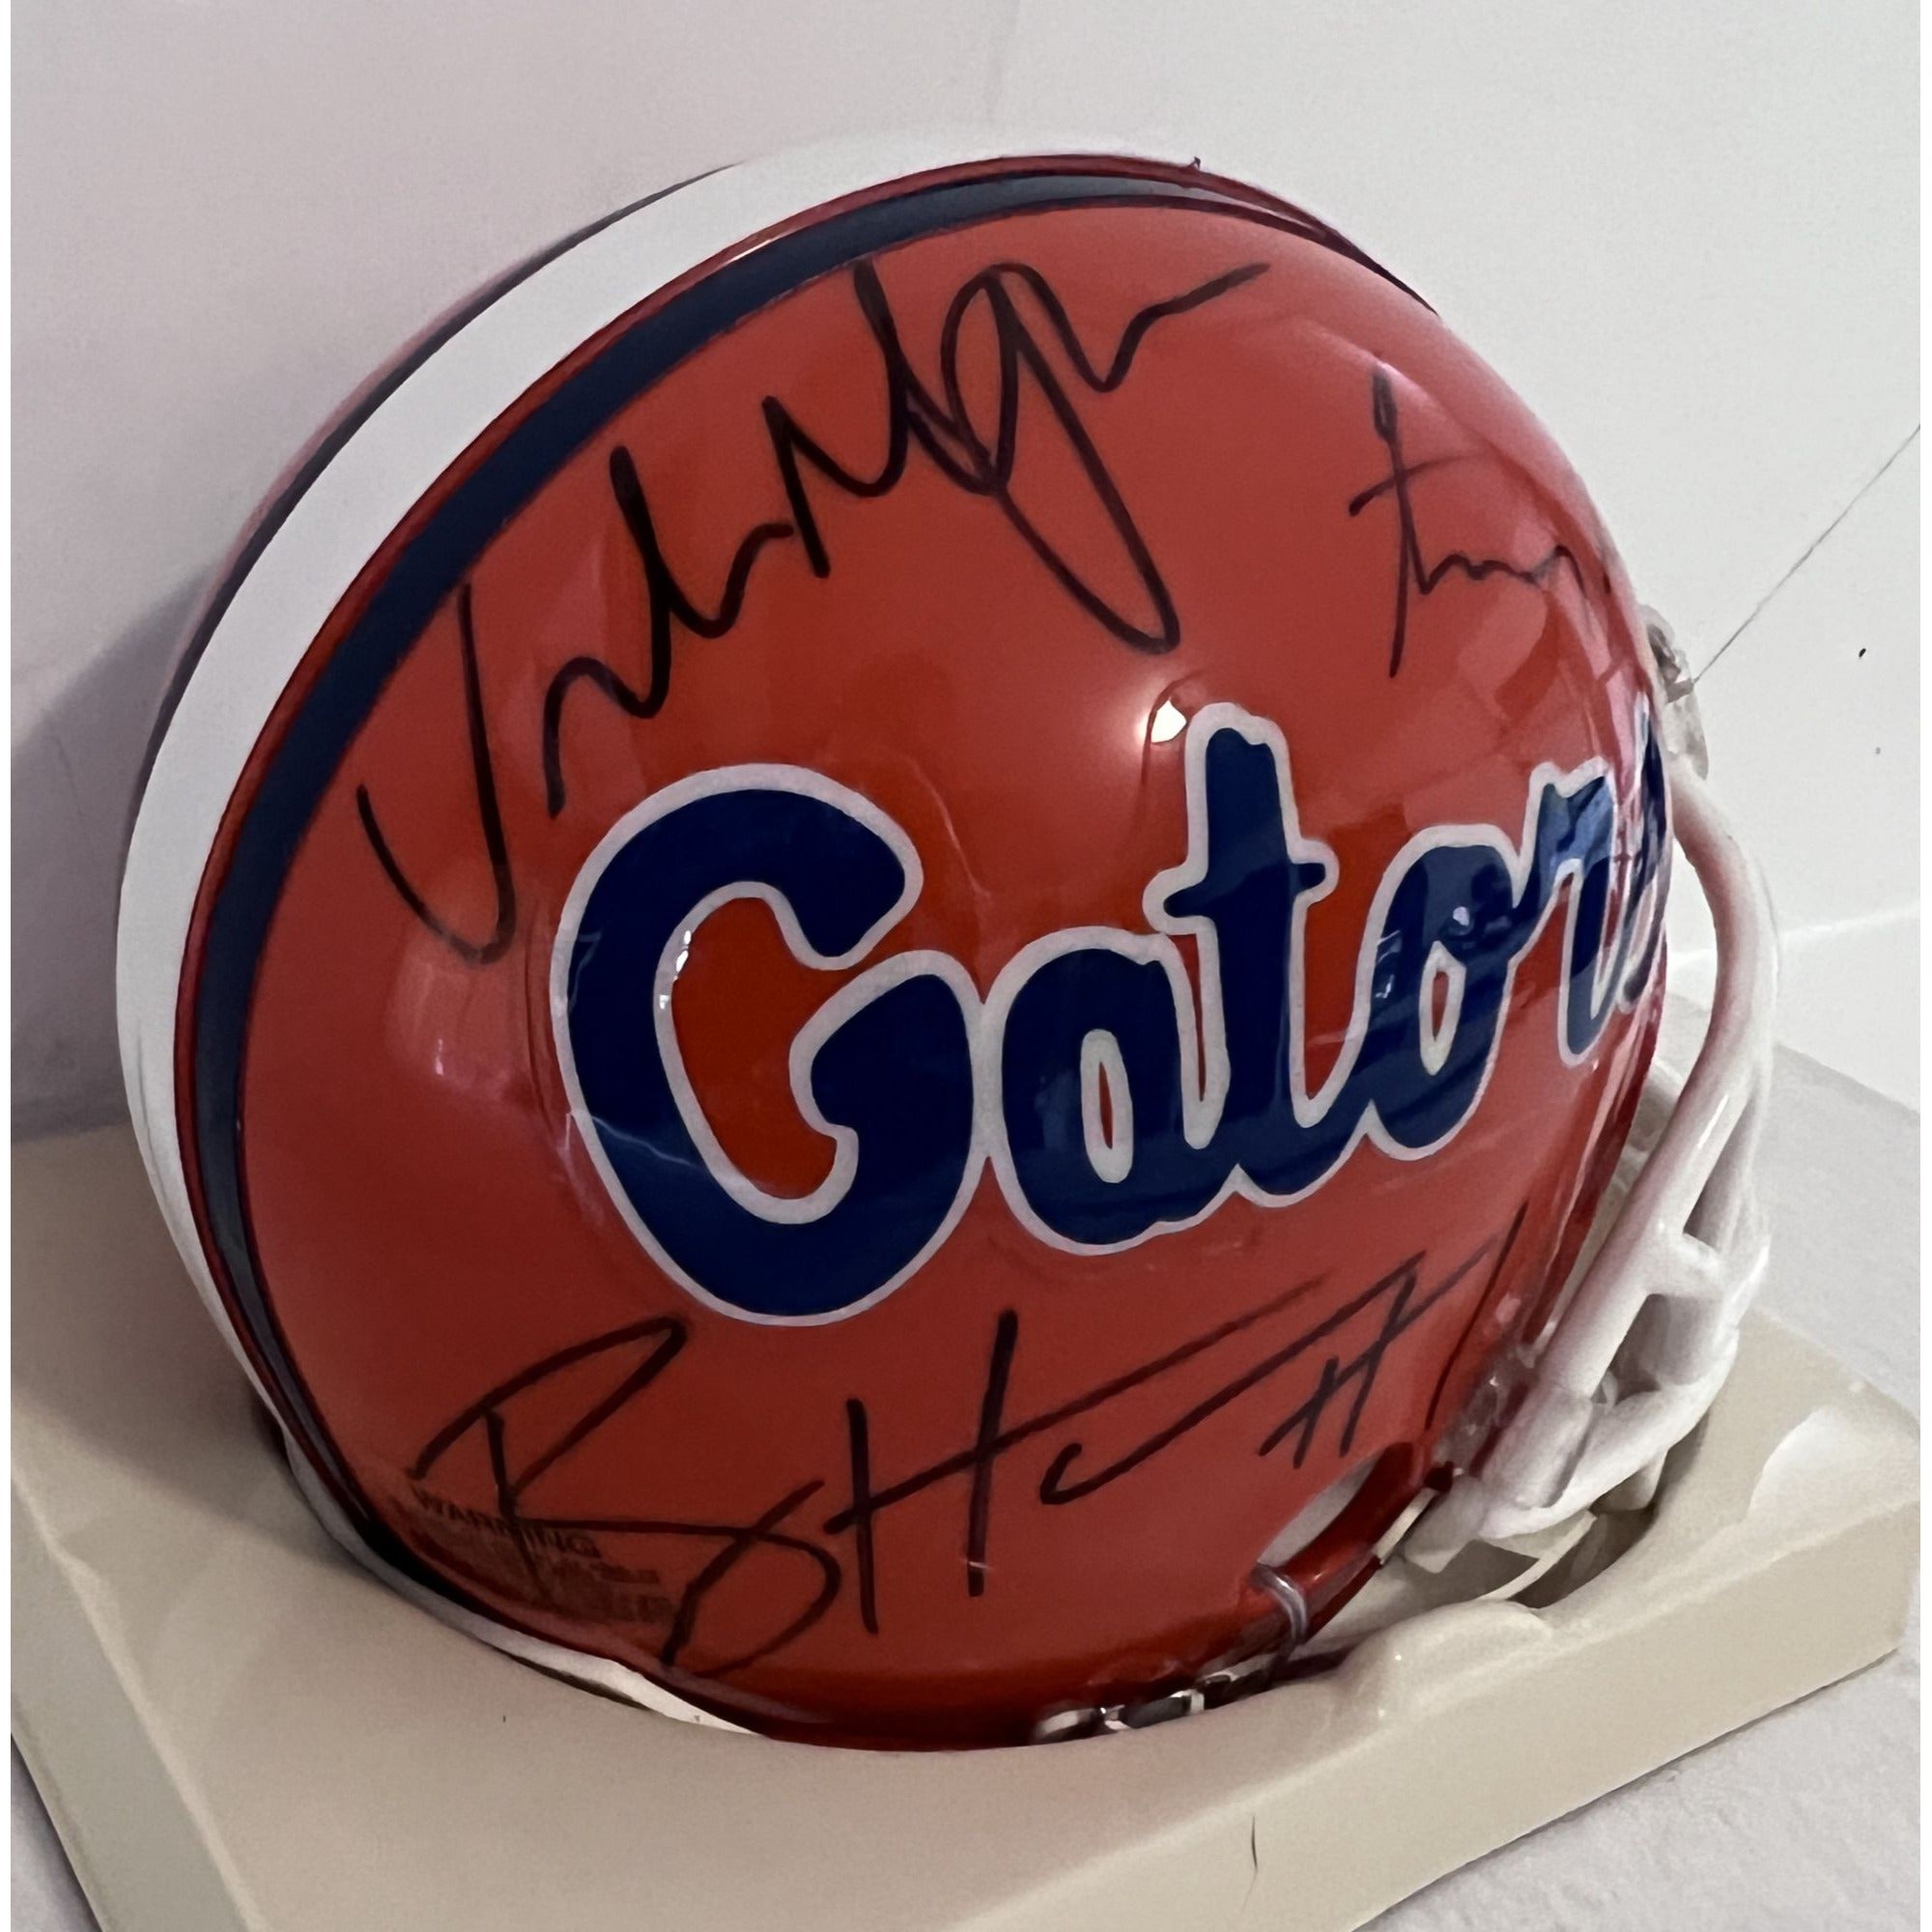 Florida Gators Tim Tebow Percy Harvin Urban Meyer mini helmet signed with proof